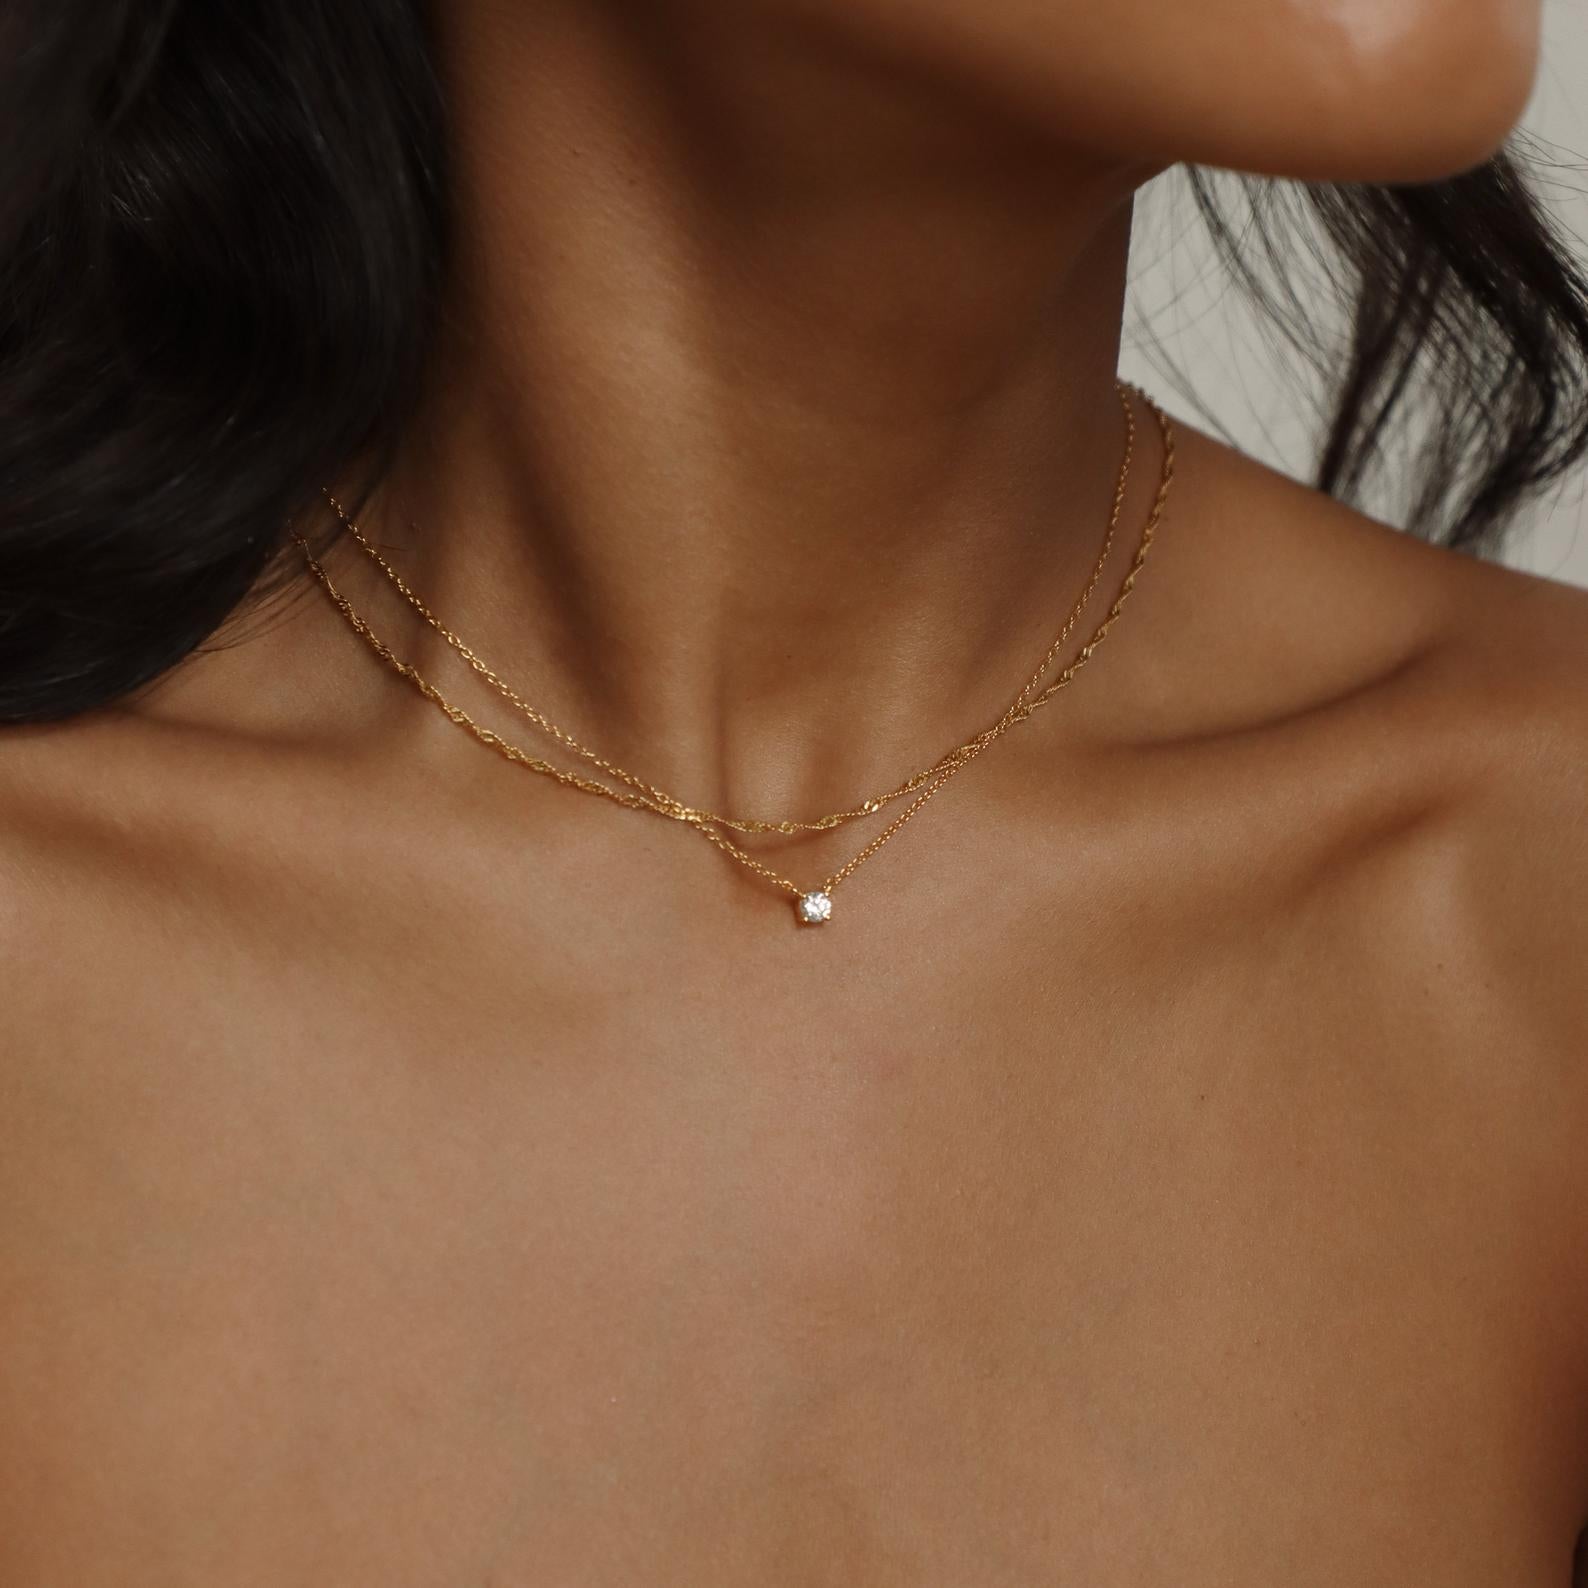 14k Gold Diamond & Moonstone Necklace - solid gold, moonstone pendant